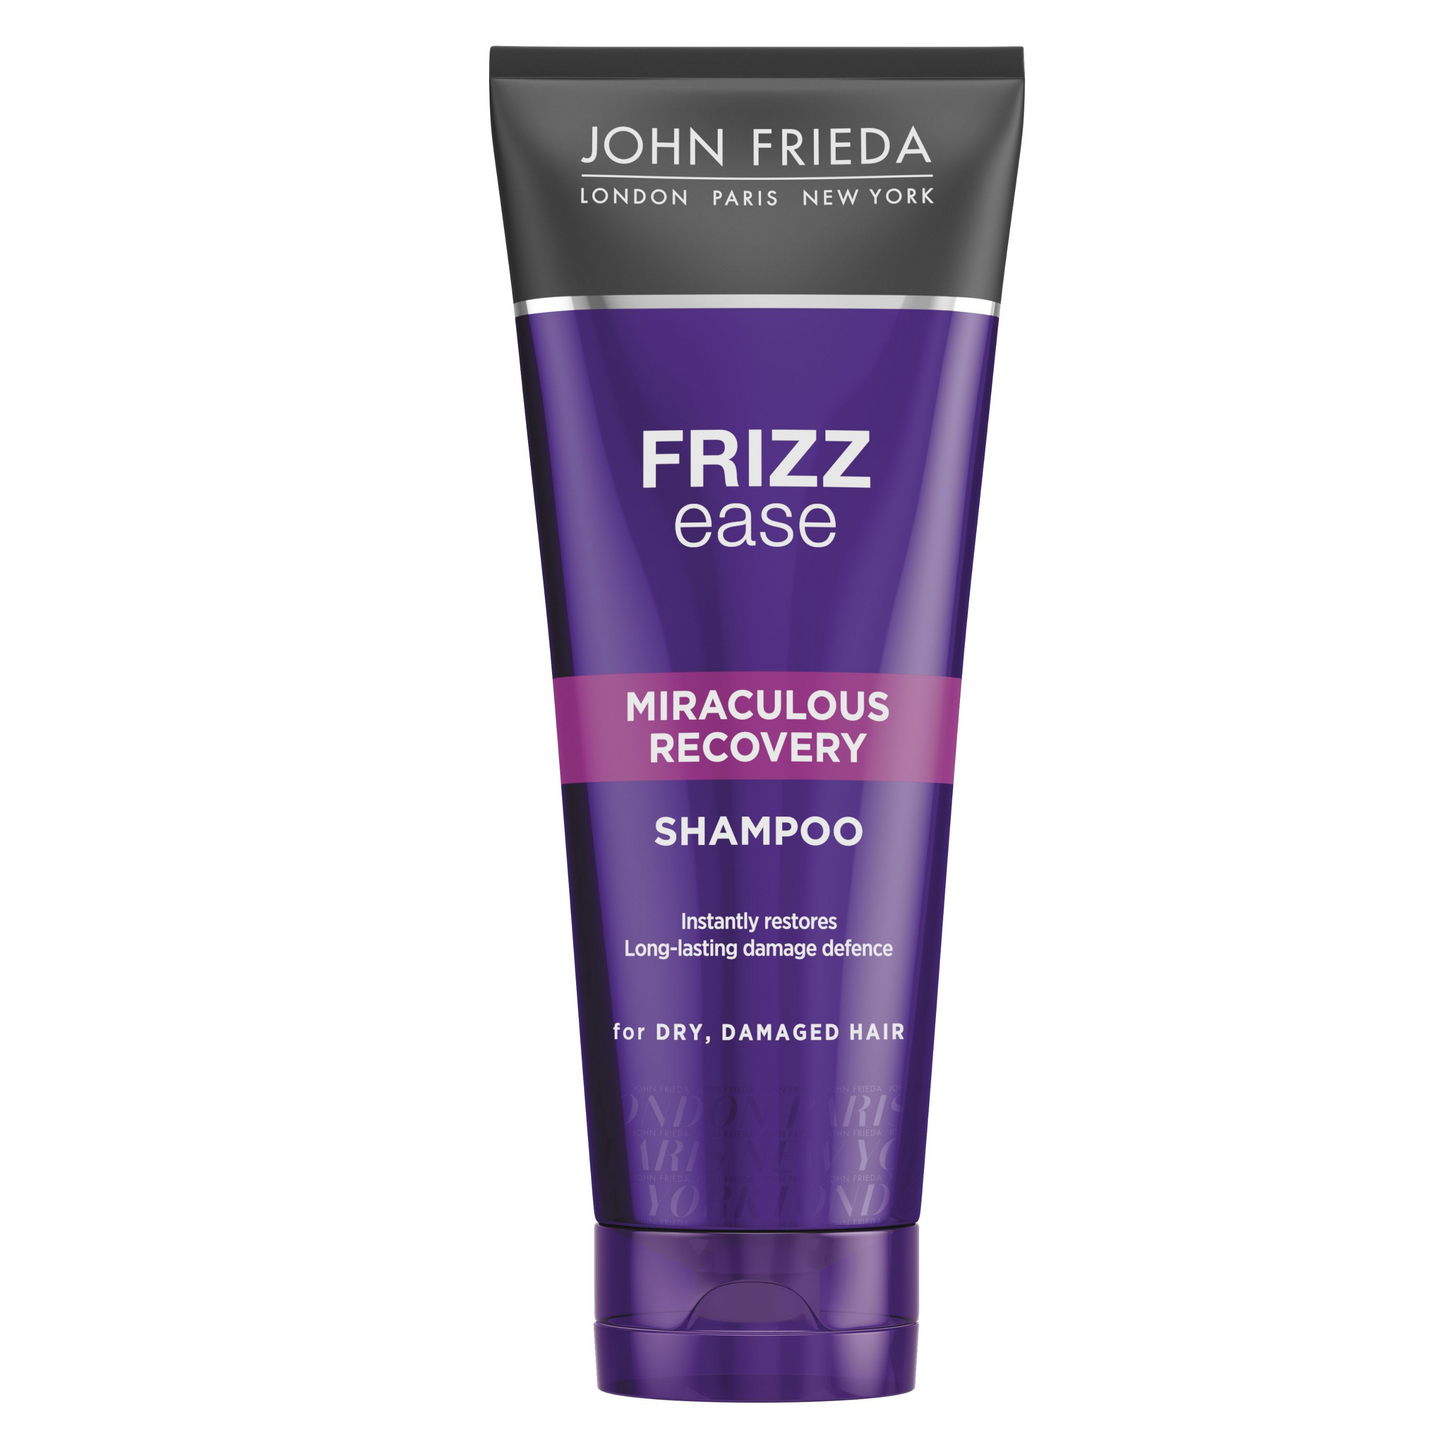 John Frieda Frizz Ease shampoo 250ml Miraculous Recovery